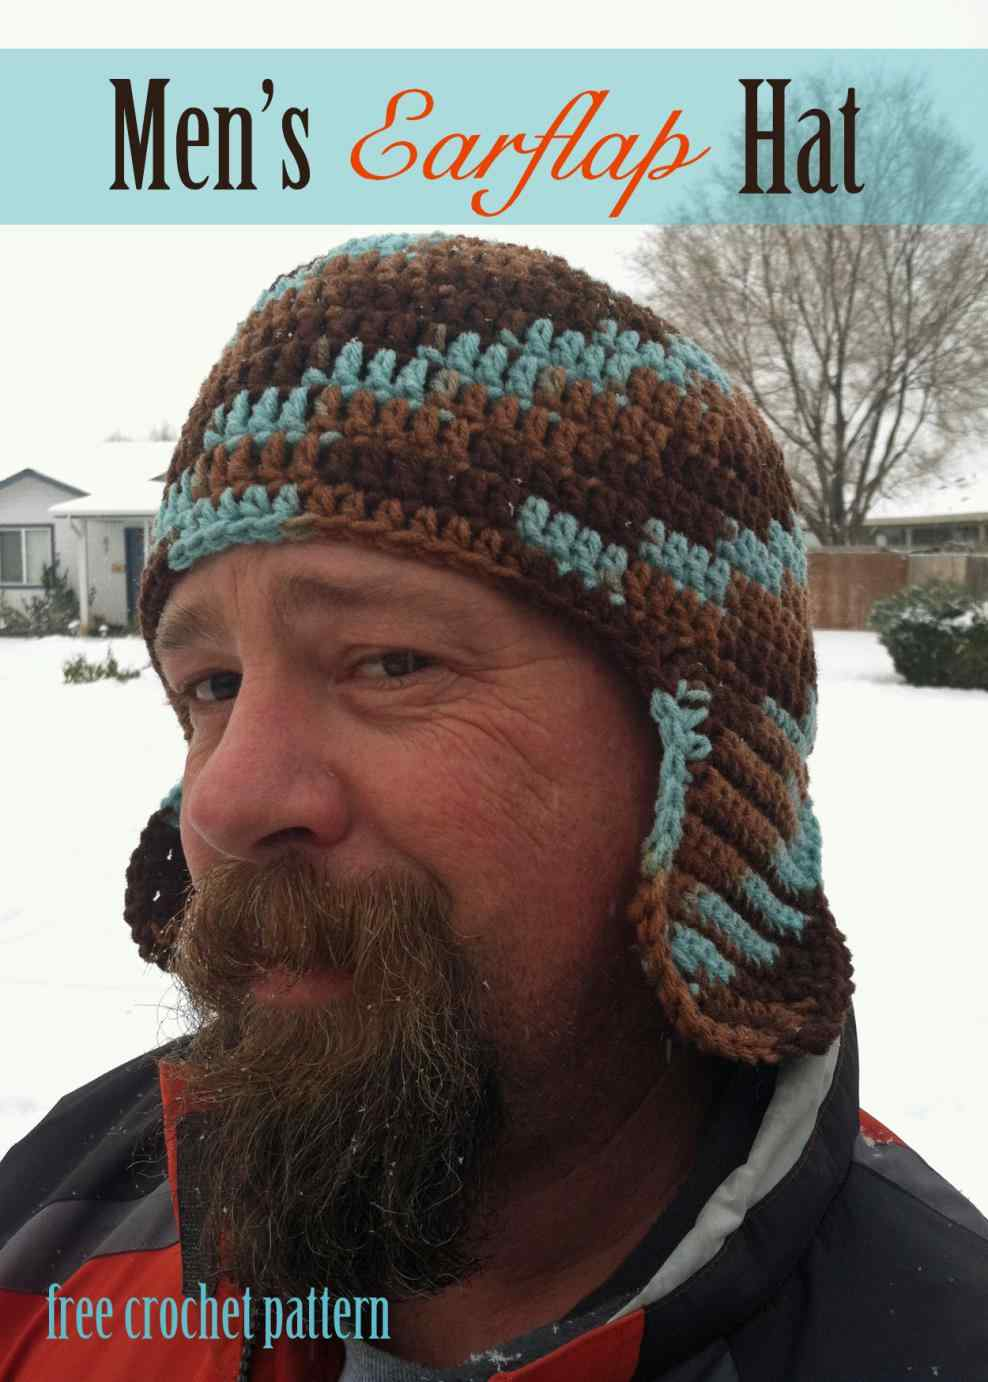 Crochet Hat Patterns For Men Patterns For Men With Ear Flap Pattern S Rhcraftowncom Adult Male